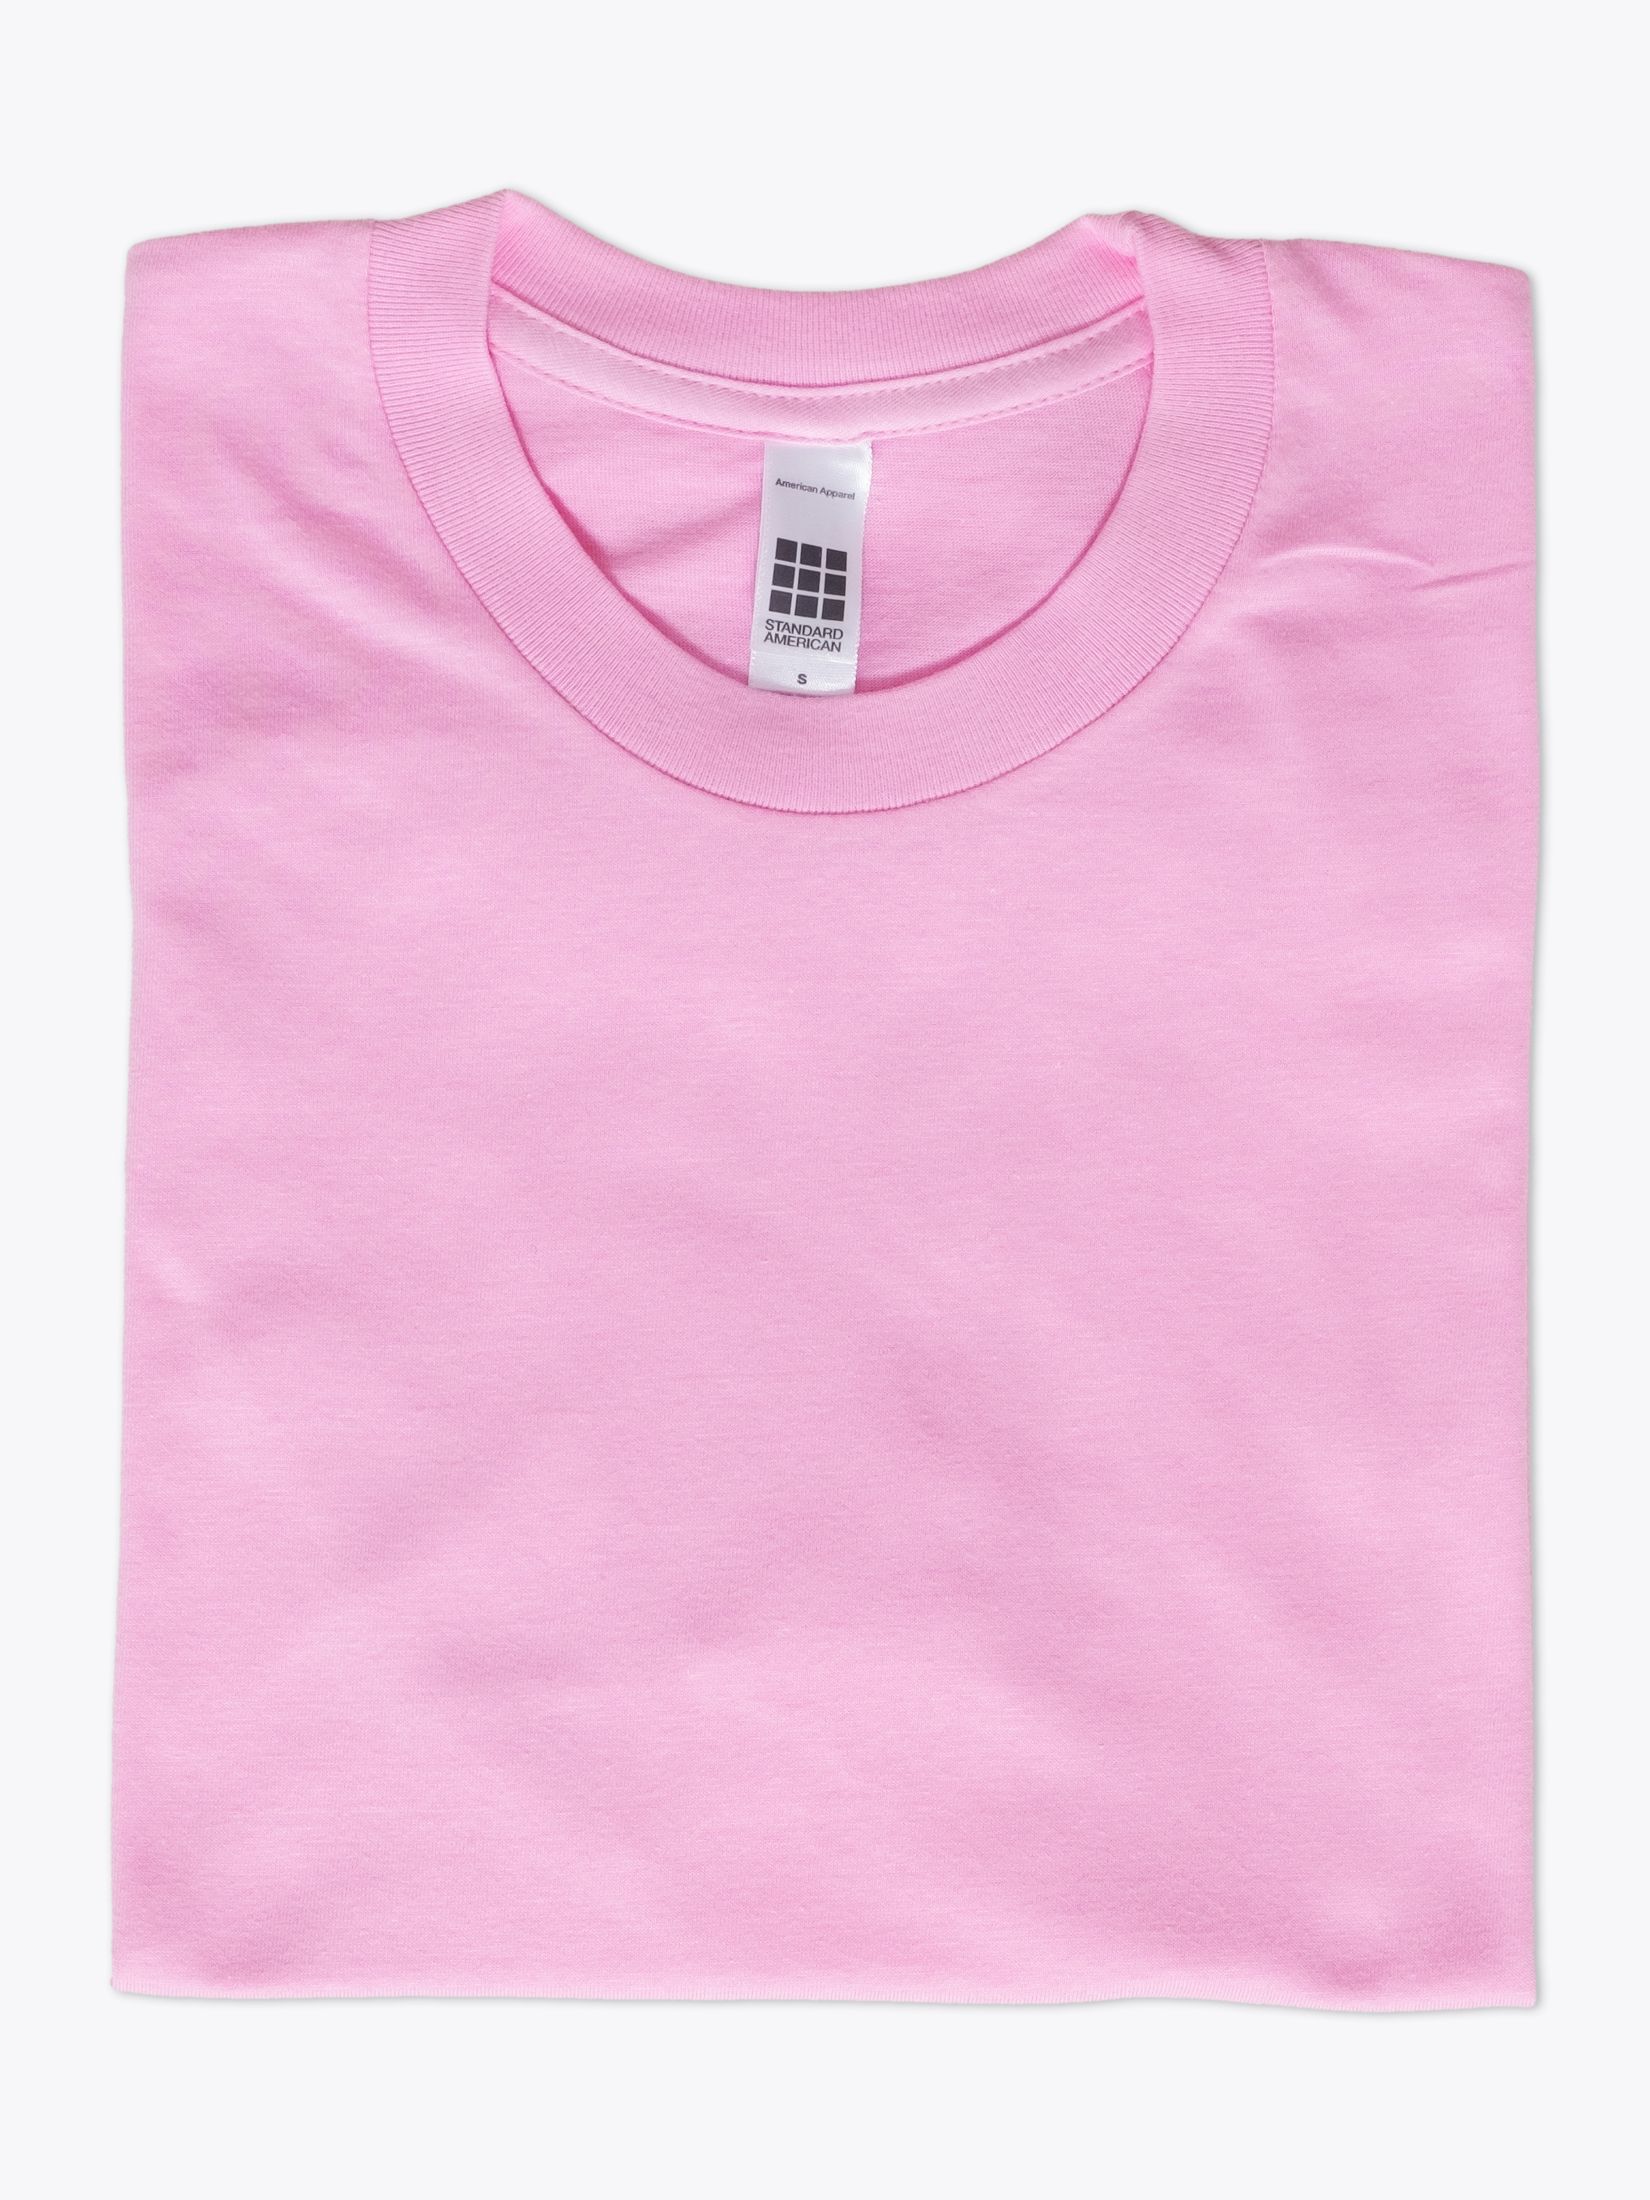 American Apparel 2001 Men's Fine Jersey S/S T-shirt Pink - E35 Shop